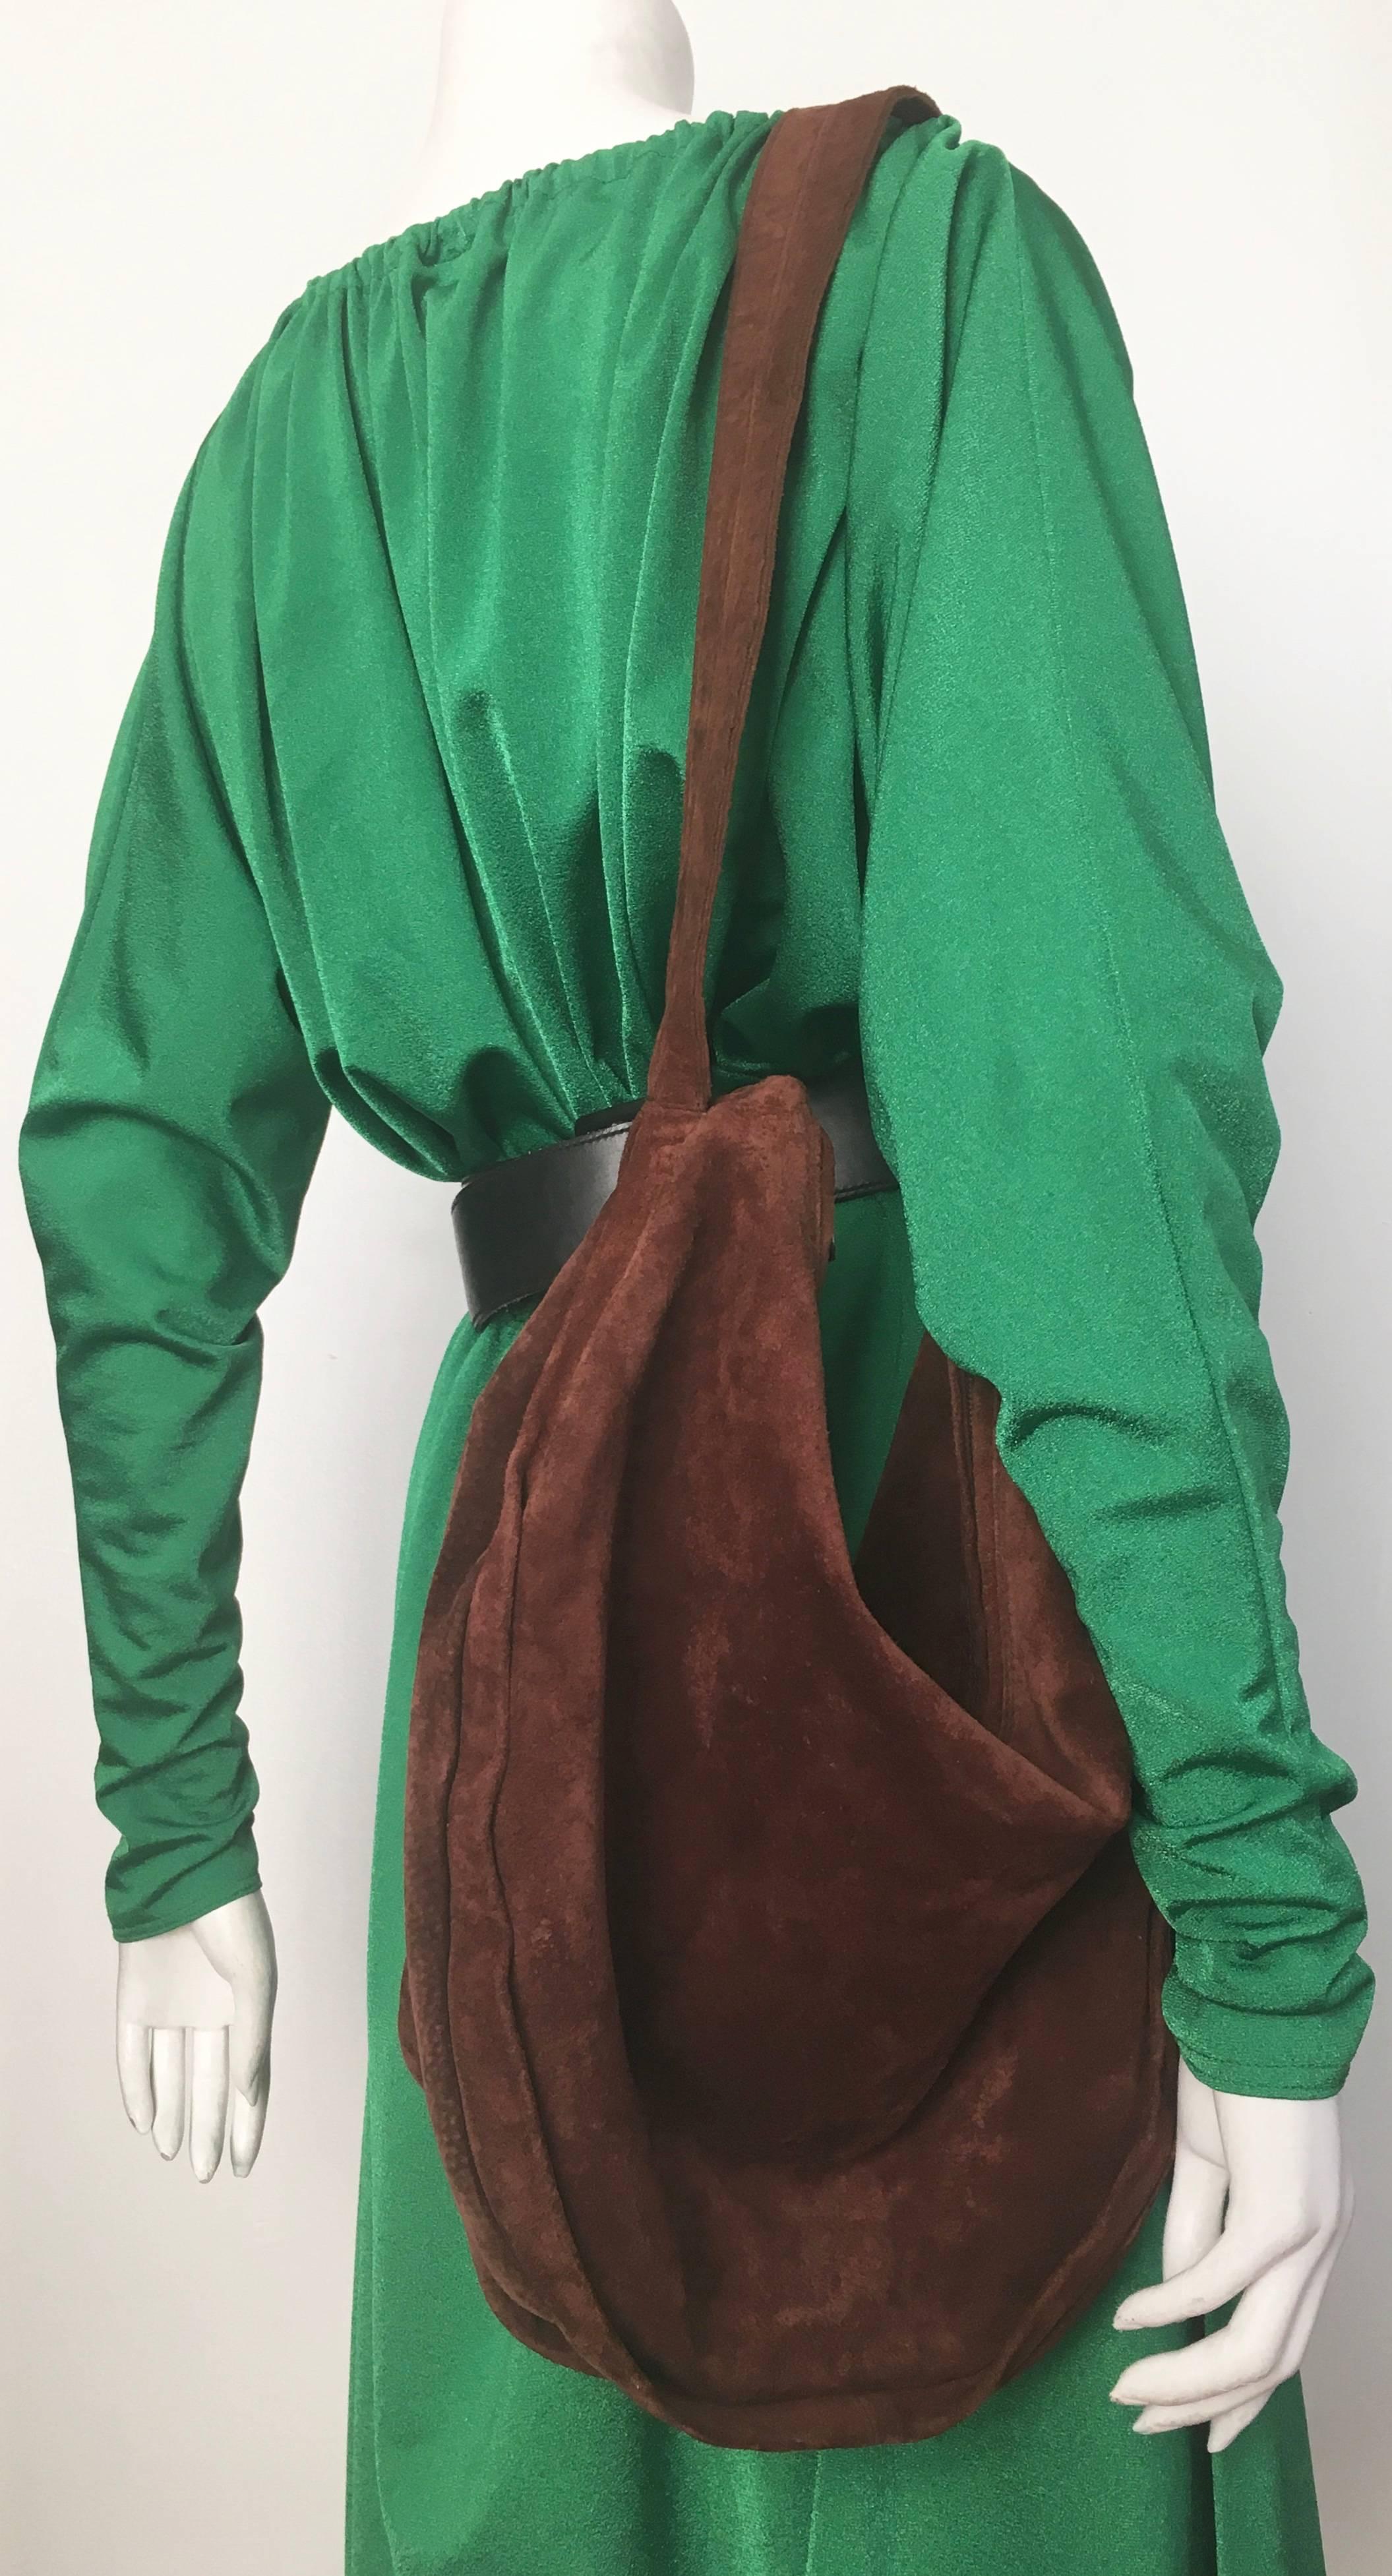 Donna Karan Brown Suede Hobo Handbag. Made in Italy. Never Used. 2